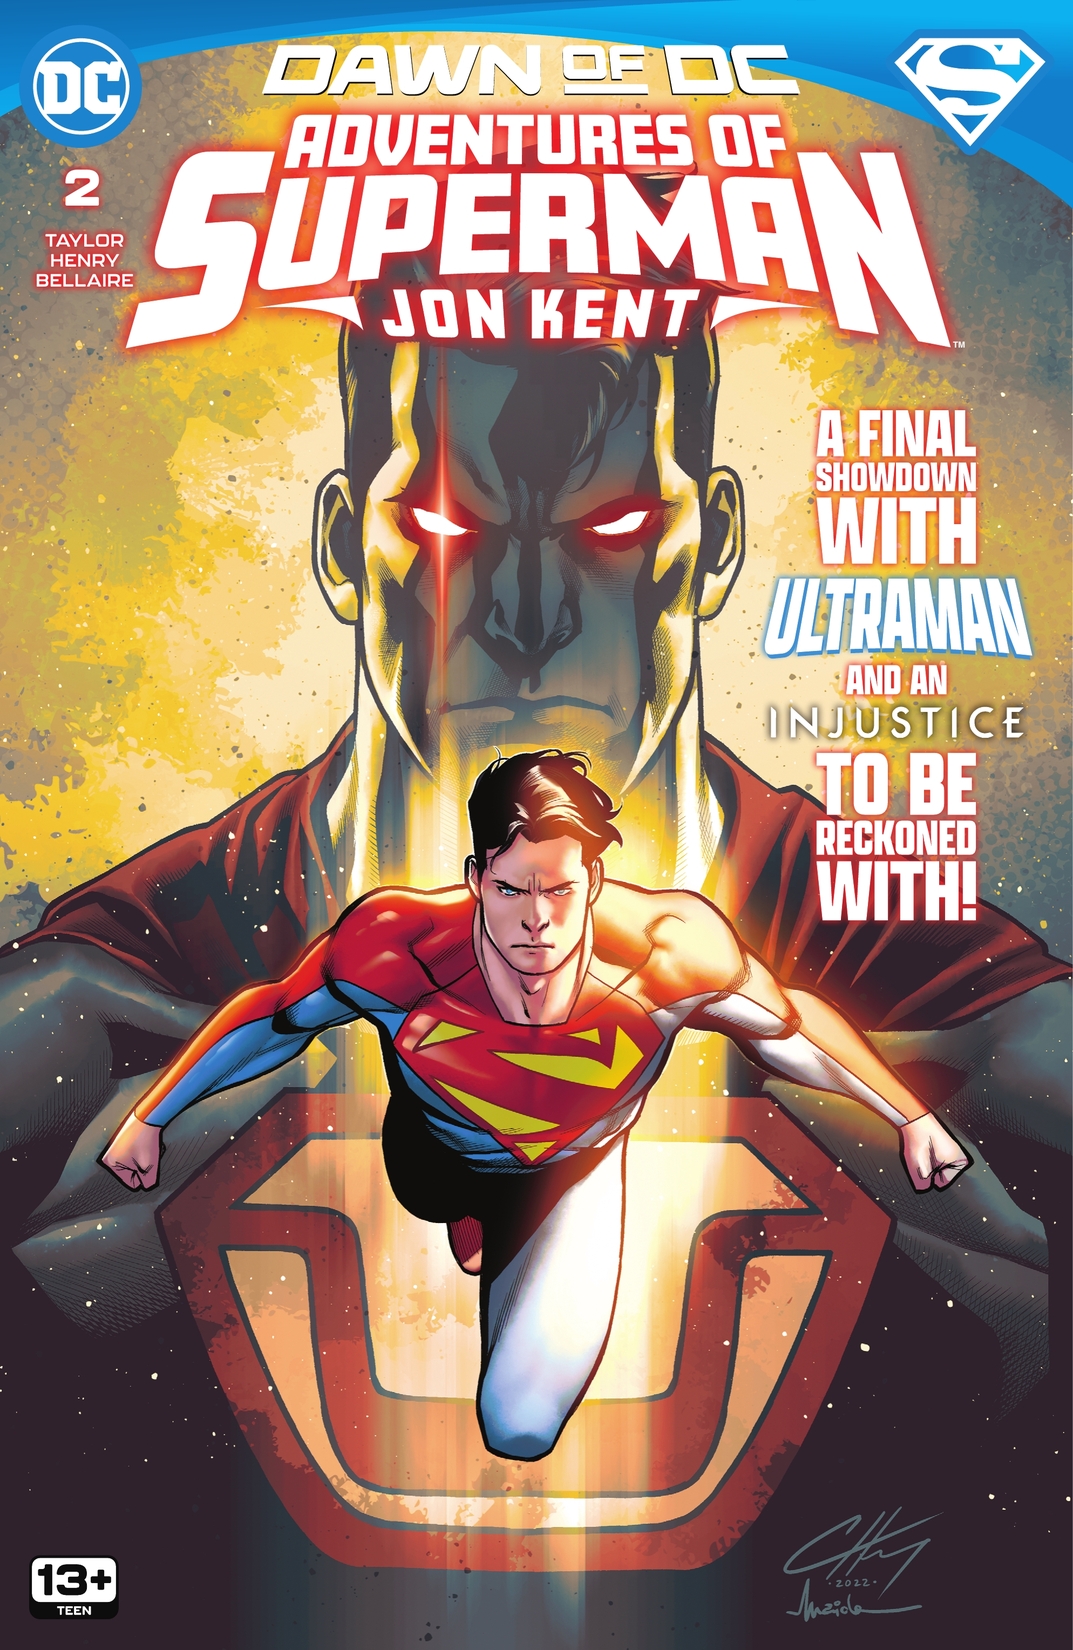 Adventures of Superman: Jon Kent #2 preview images